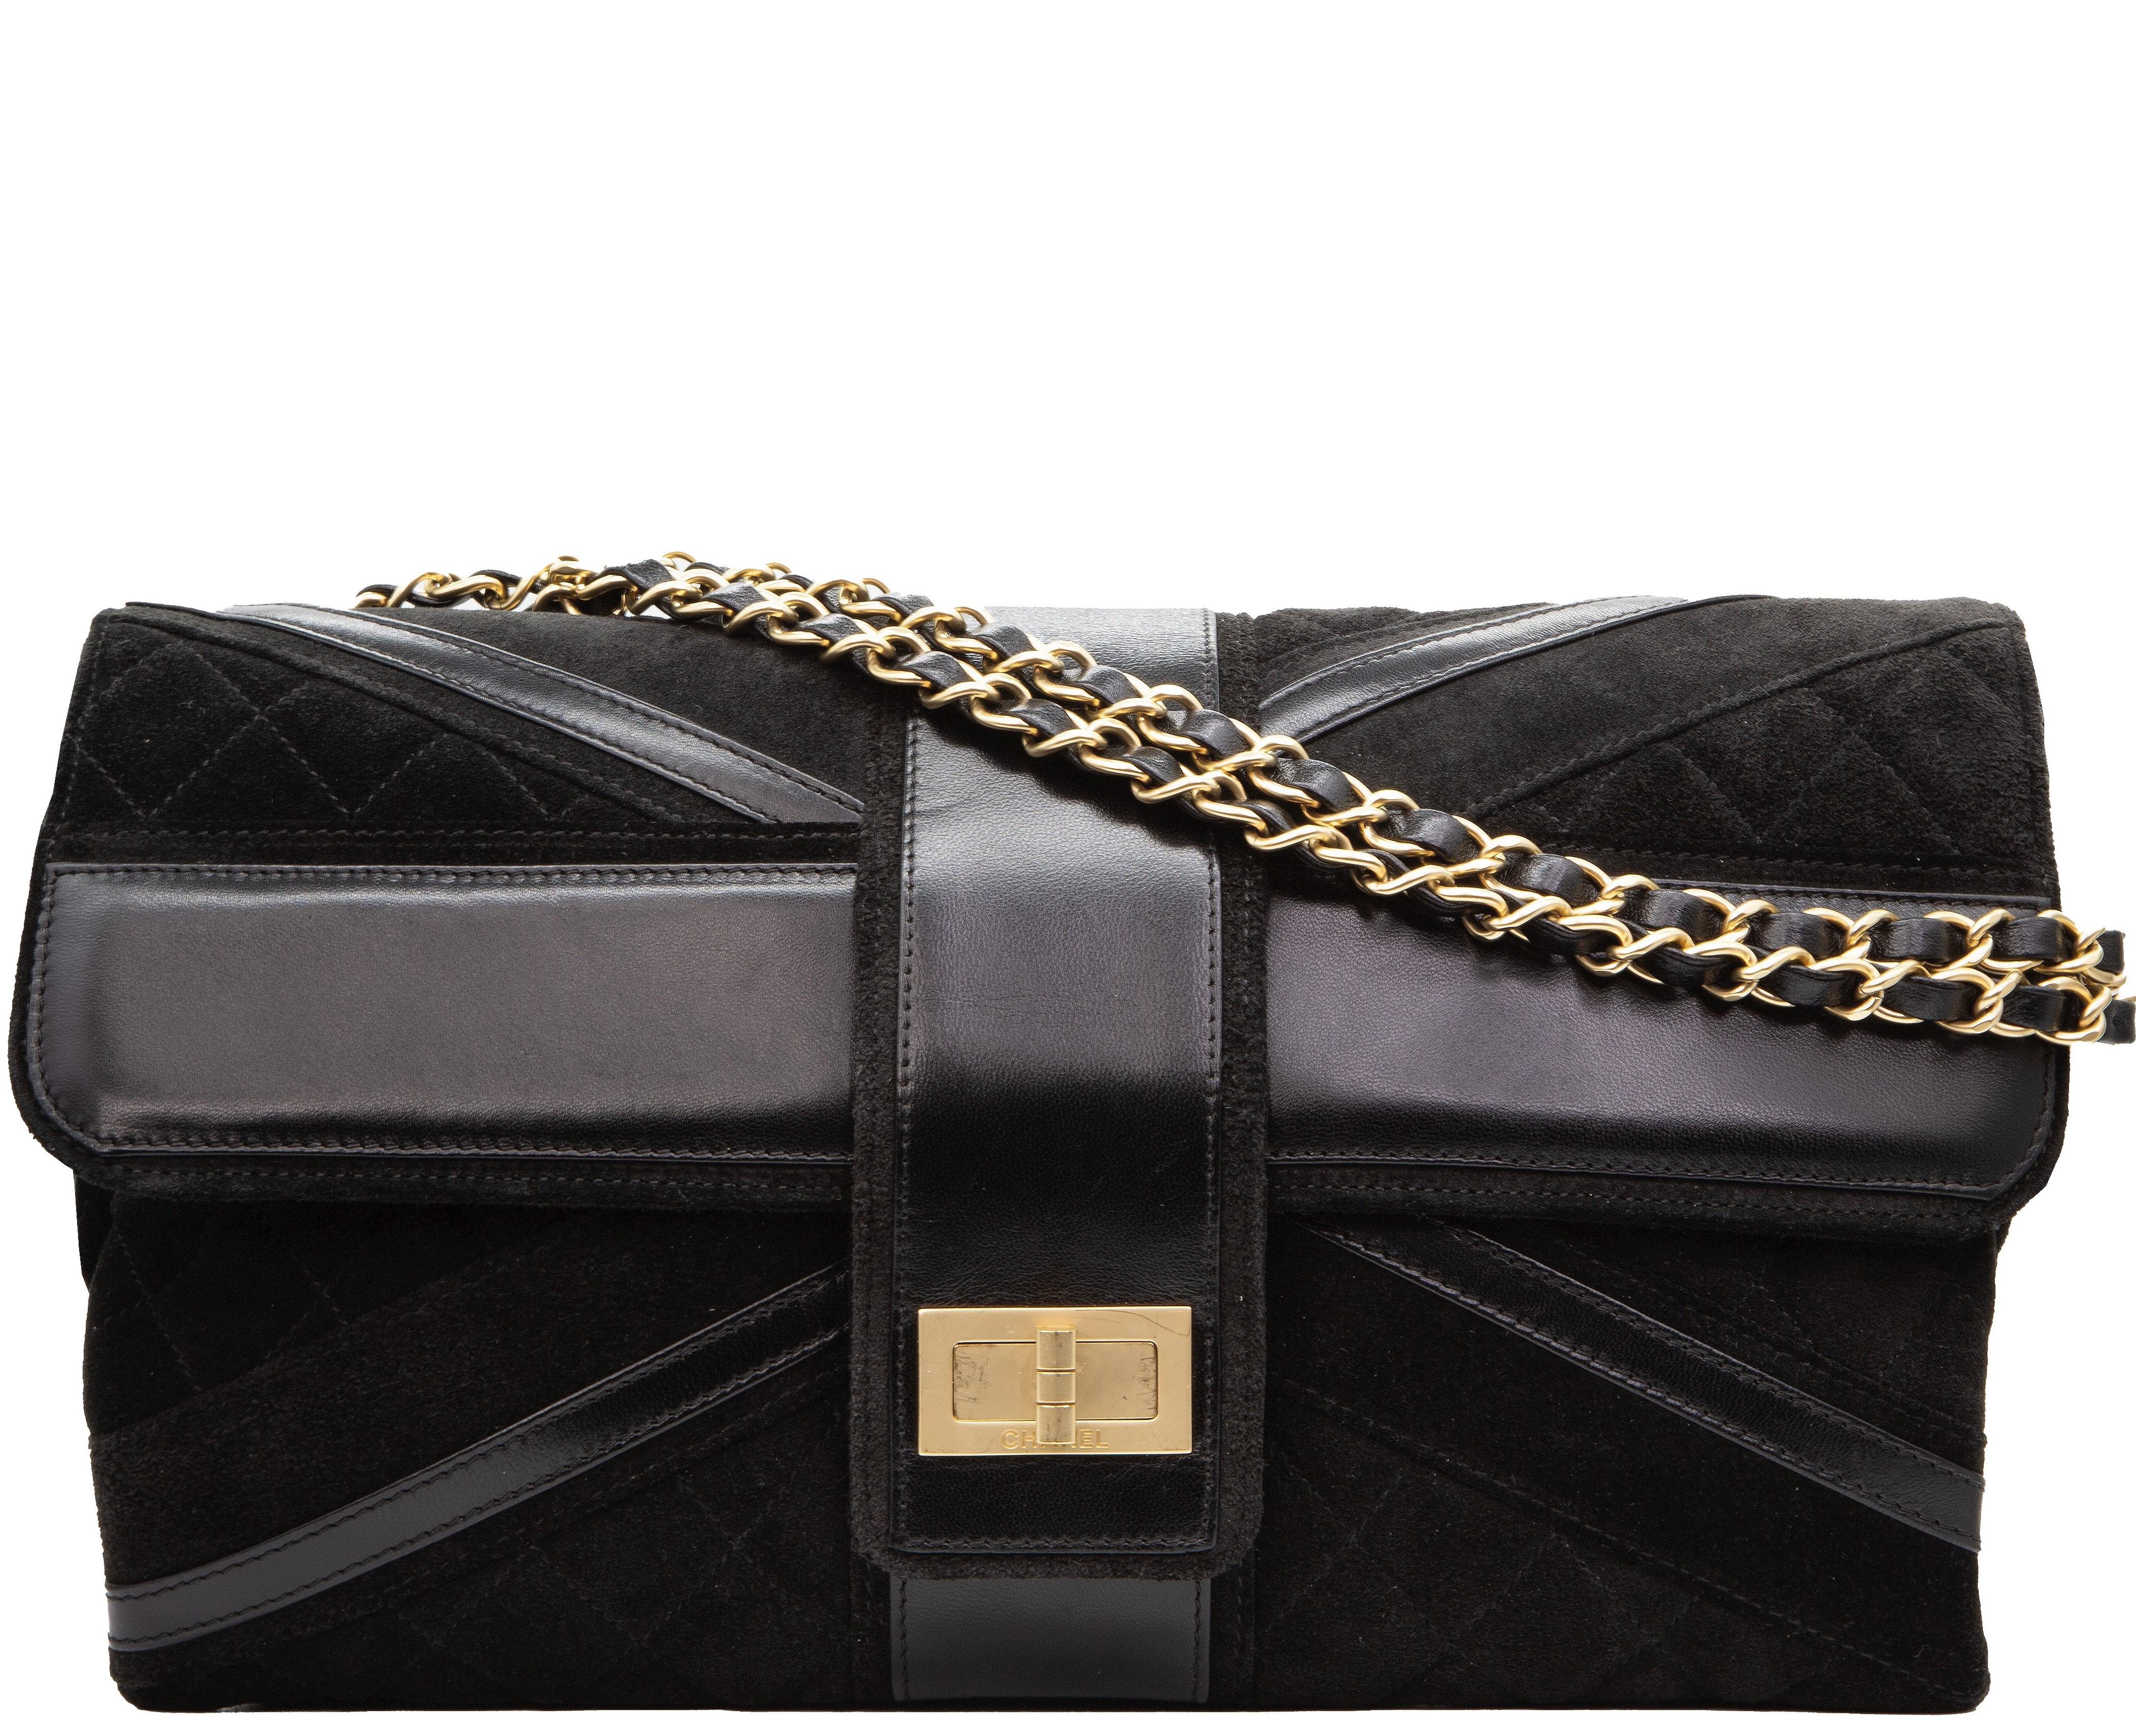 Chanel Limited Edition Union Jack Mademoiselle Flap Bag Auction